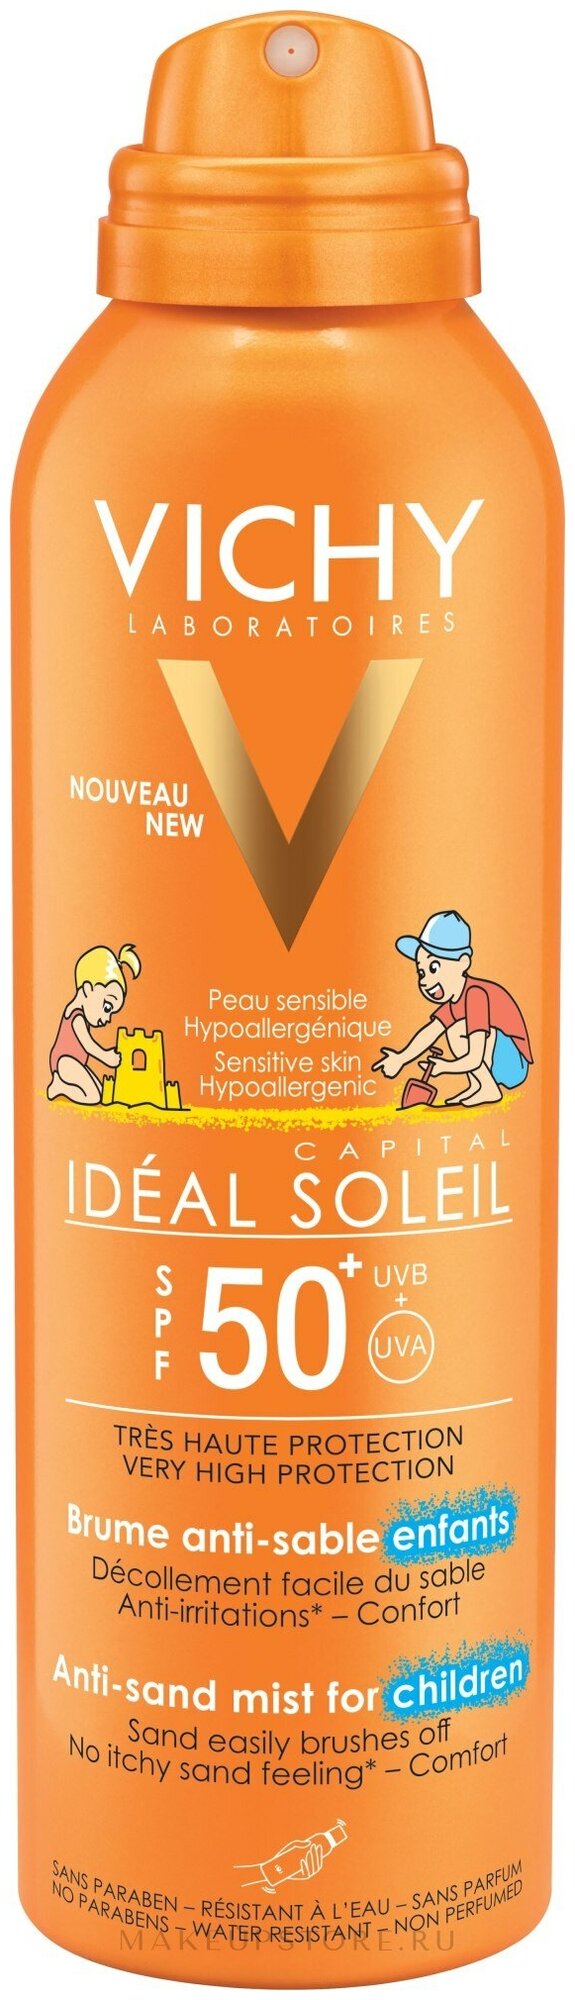 Vichy Capital Soleil спрей д/детей 200мл SPF 50+ анти-песок